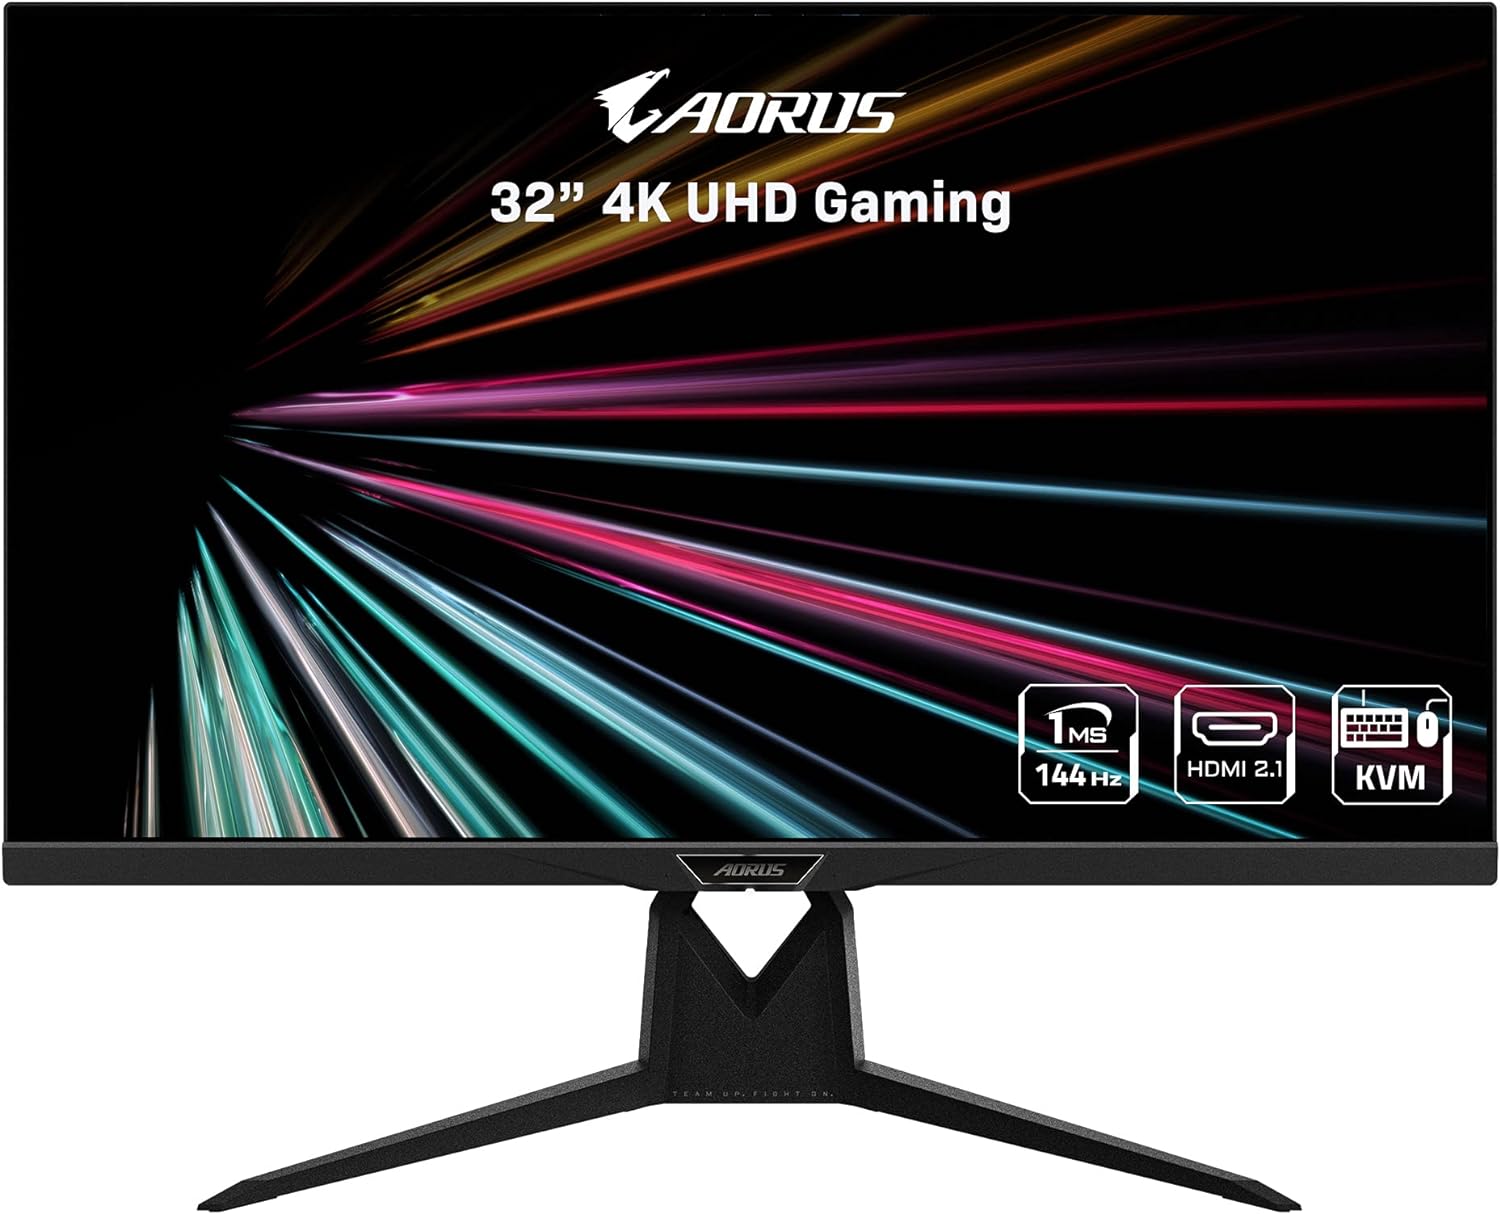 Gigabyte AORUS FI32U 31.5" 144 Hz 4K HDR IPS Gaming Monitor $499.99 at Amazon